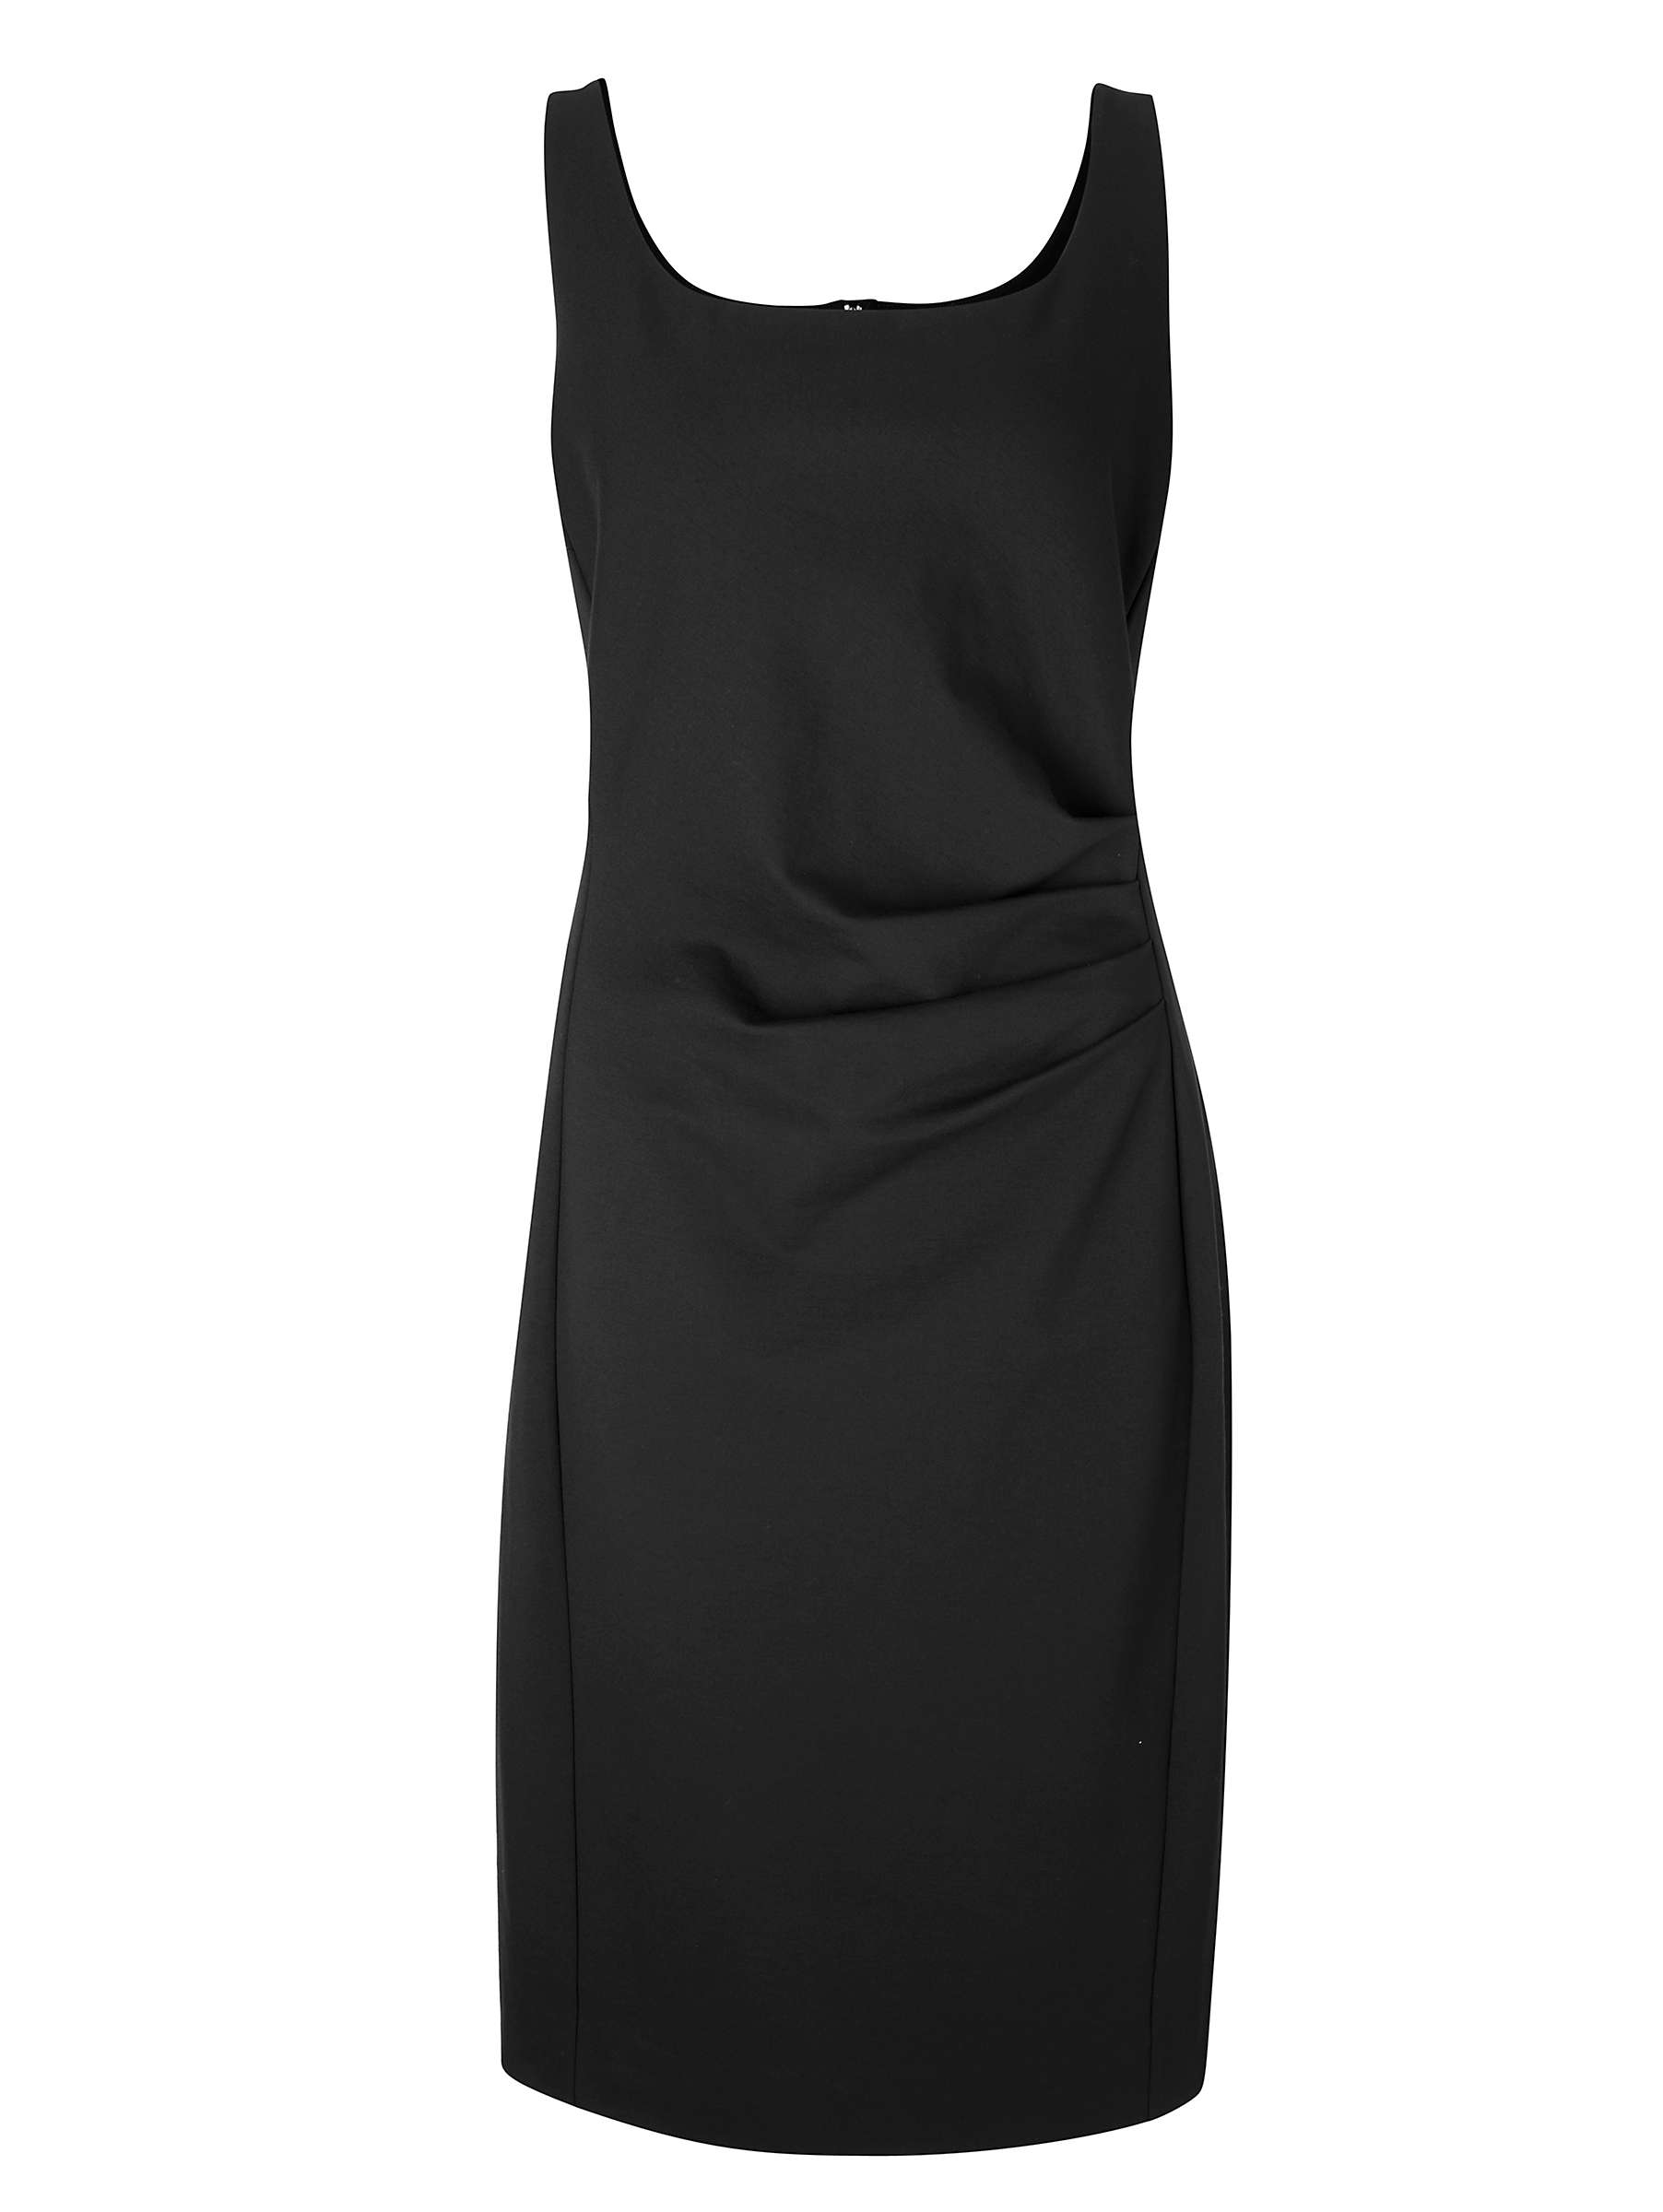 Winser London Marilyn Miracle Dress, Black at John Lewis & Partners